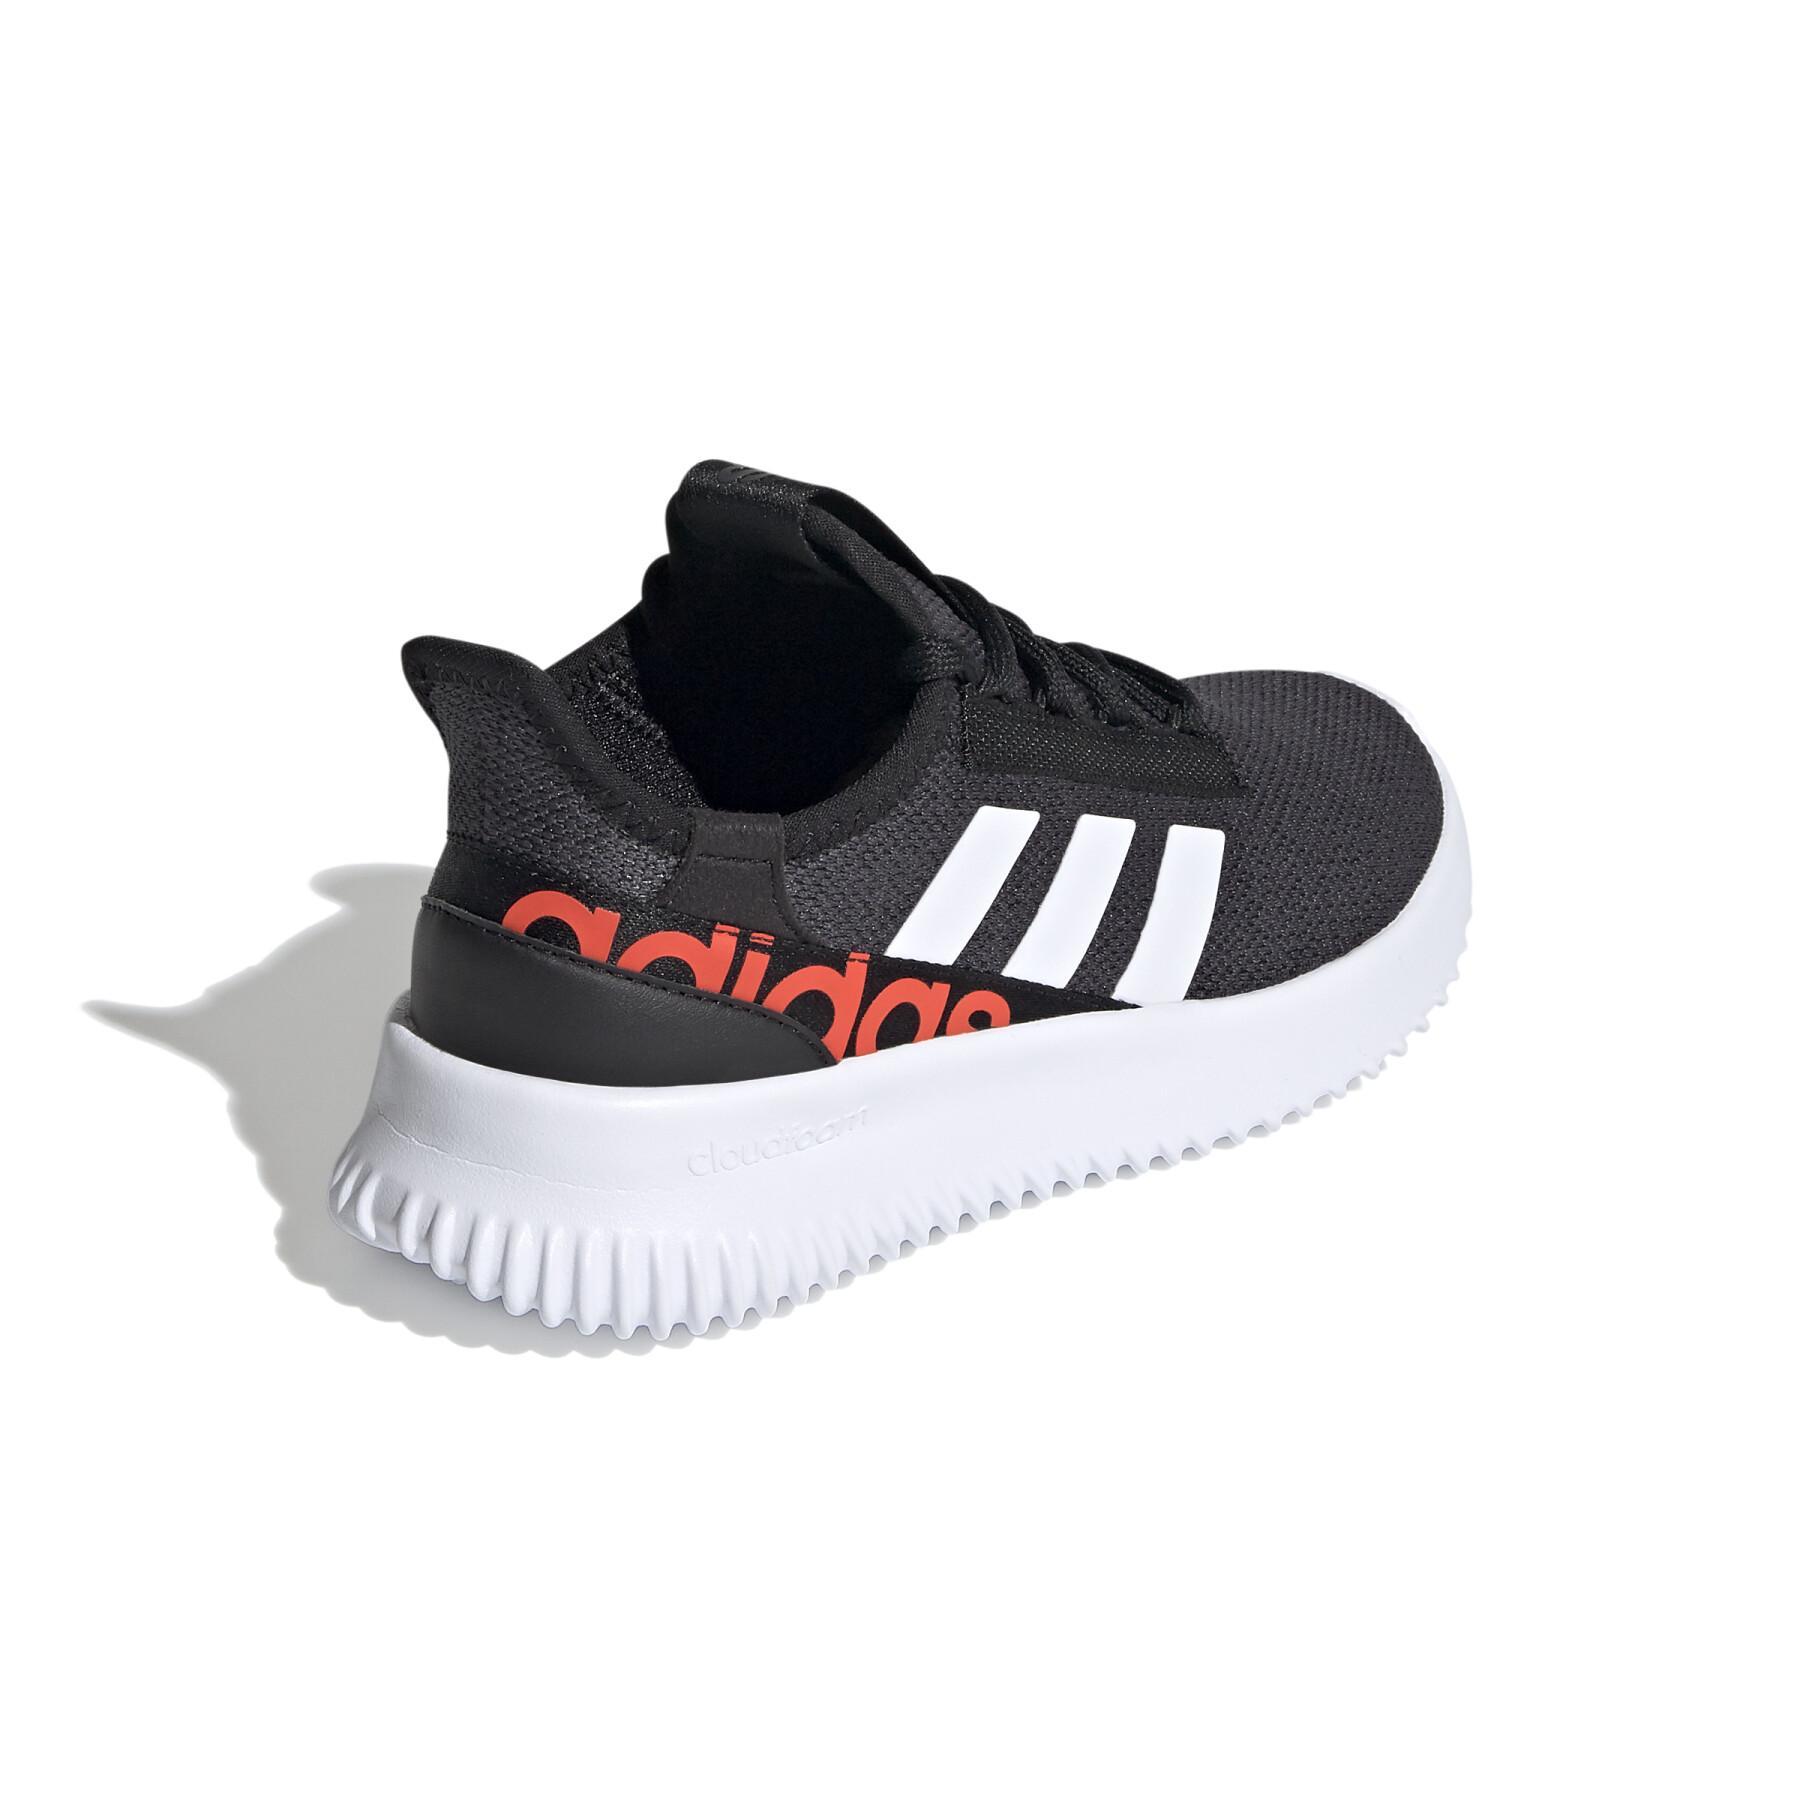 Chaussures de running enfant adidas Kaptir 2.0